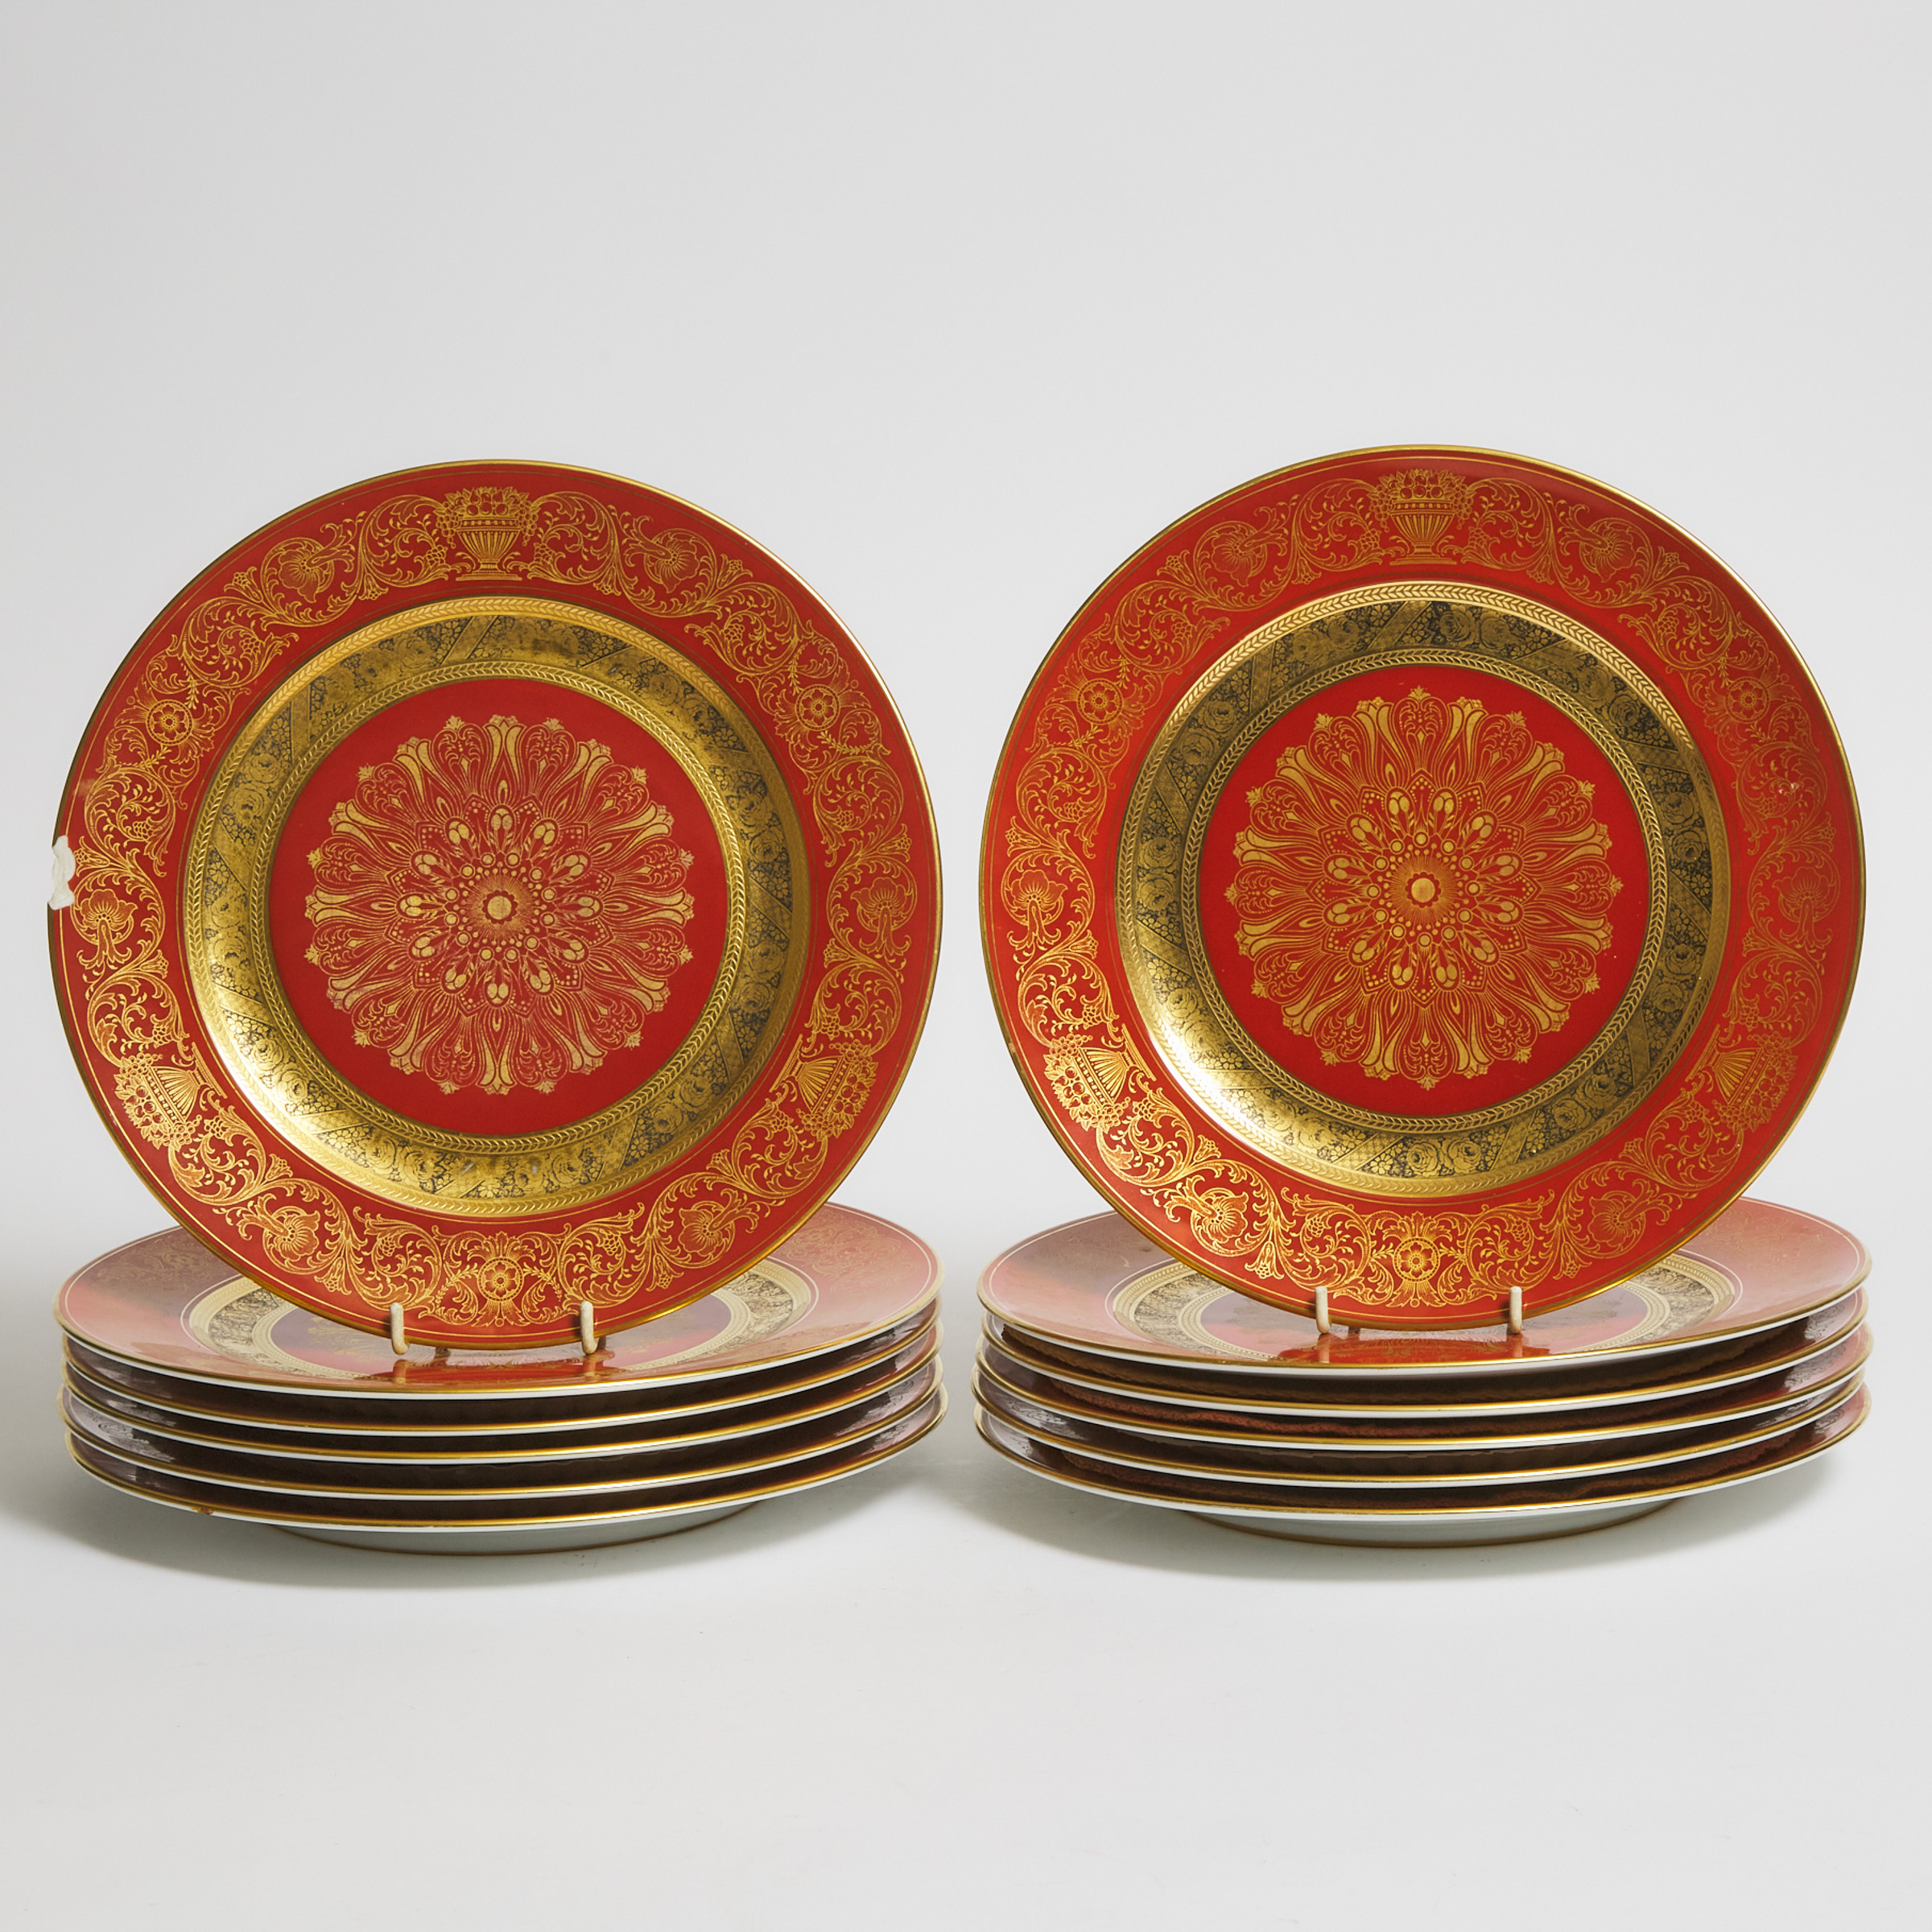 Set of Twelve Rosenthal Service Plates, 20th century